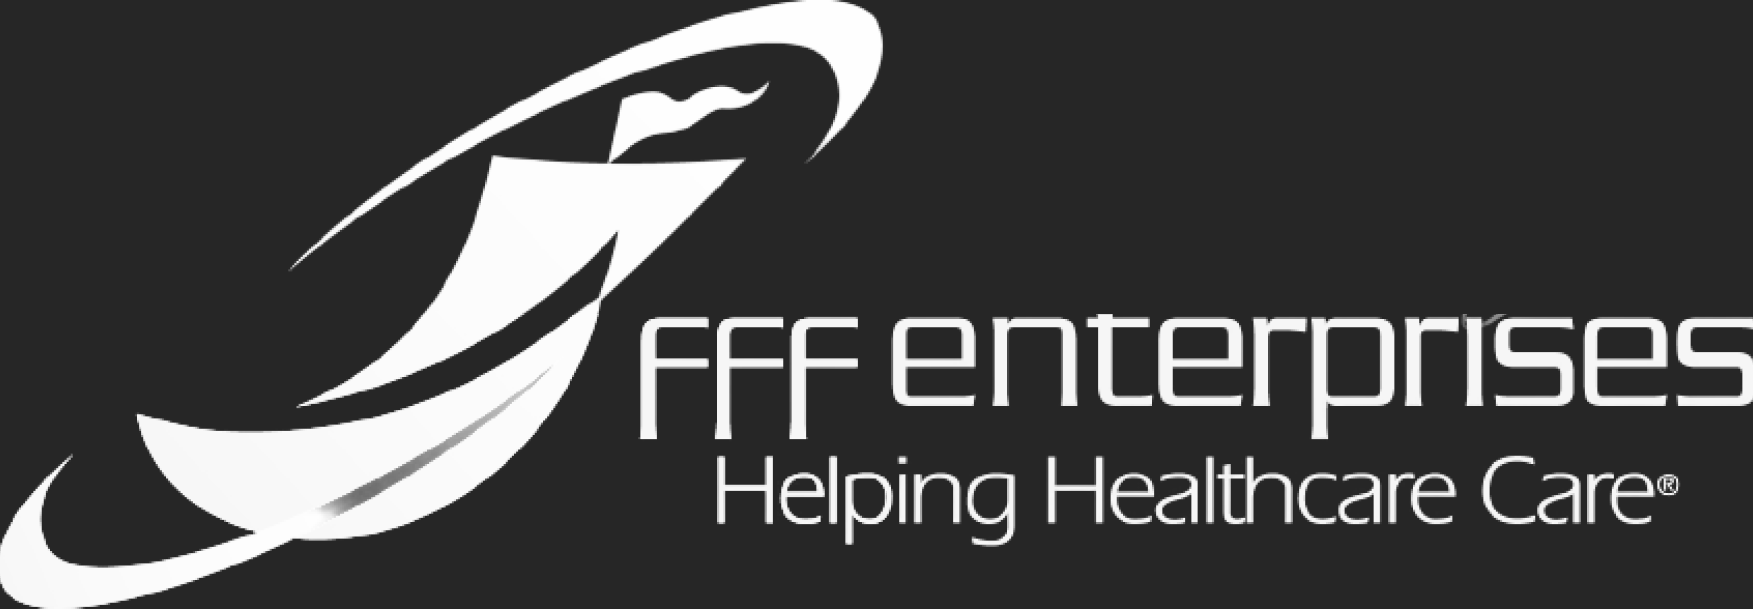 Logo of FF enterprises